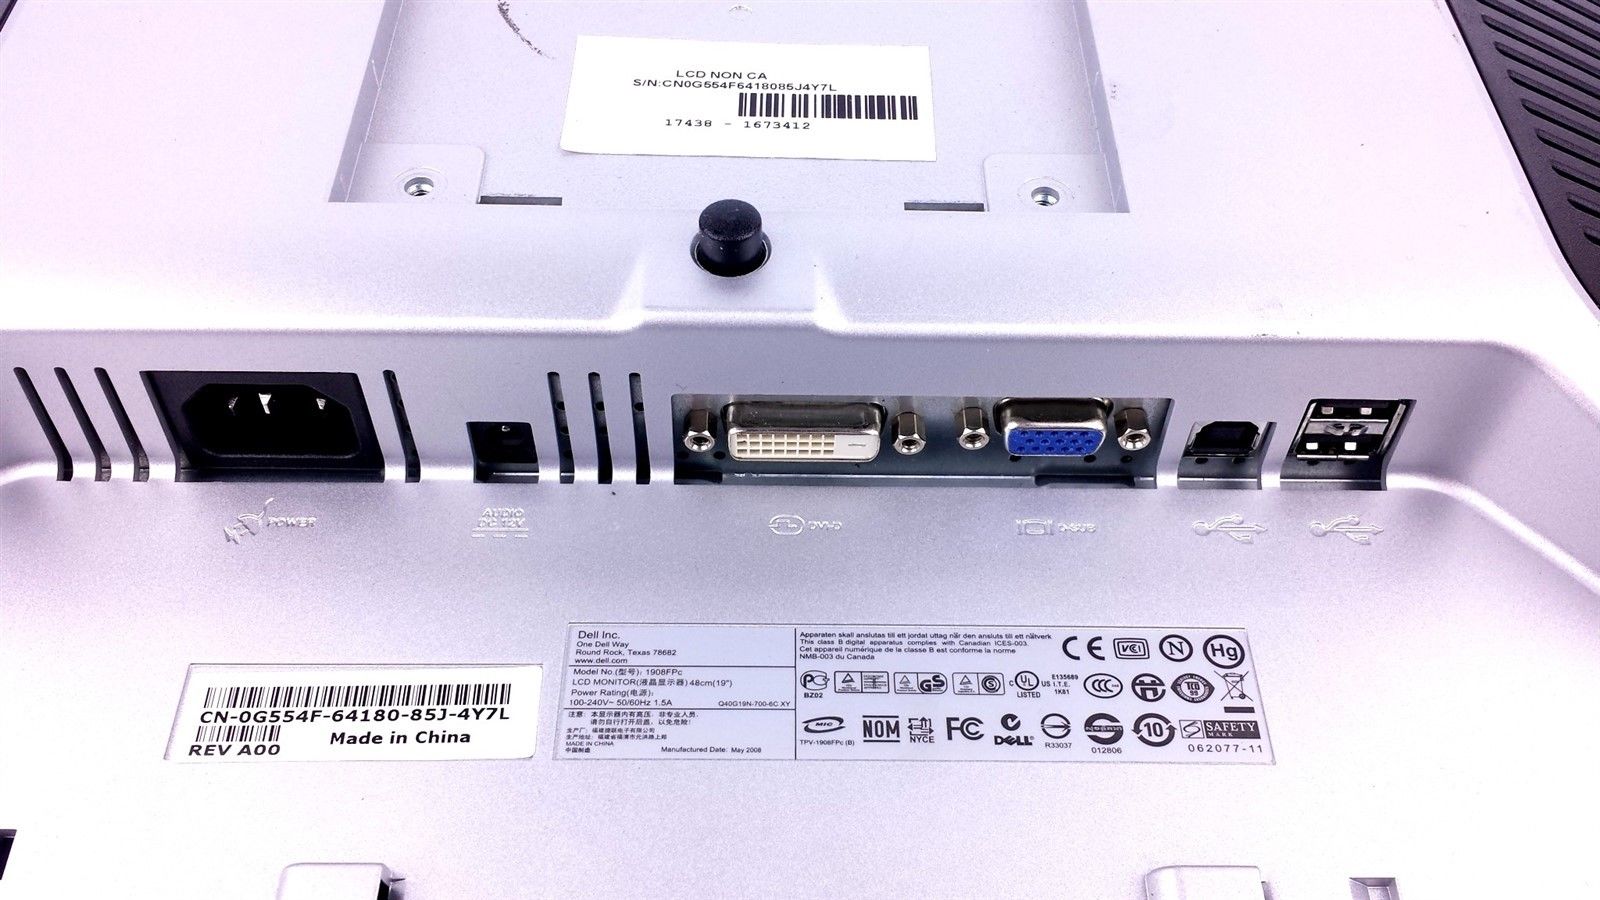 Dell UltraSharp 1908FPc FHD LCD Computer Monitor 19" G554F w/ Power & VGA Cord